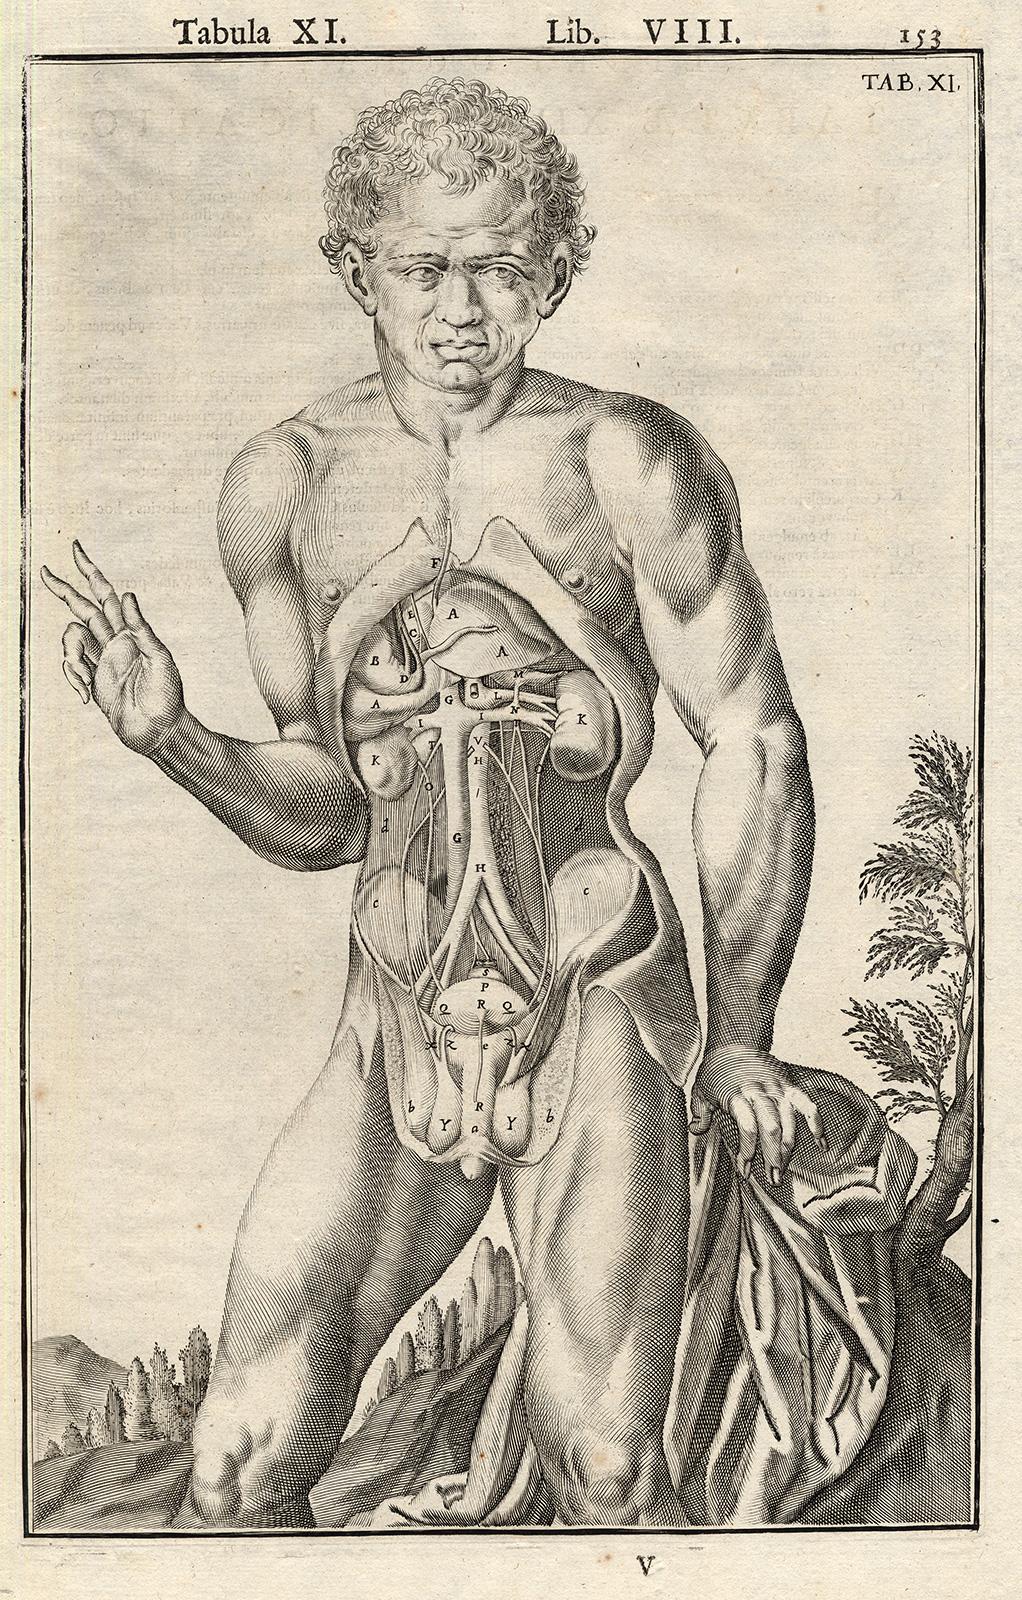 2 anatomical prints - Male organs by Spigelius - Engraving - 17th century - Print by Adrianus Spigelius